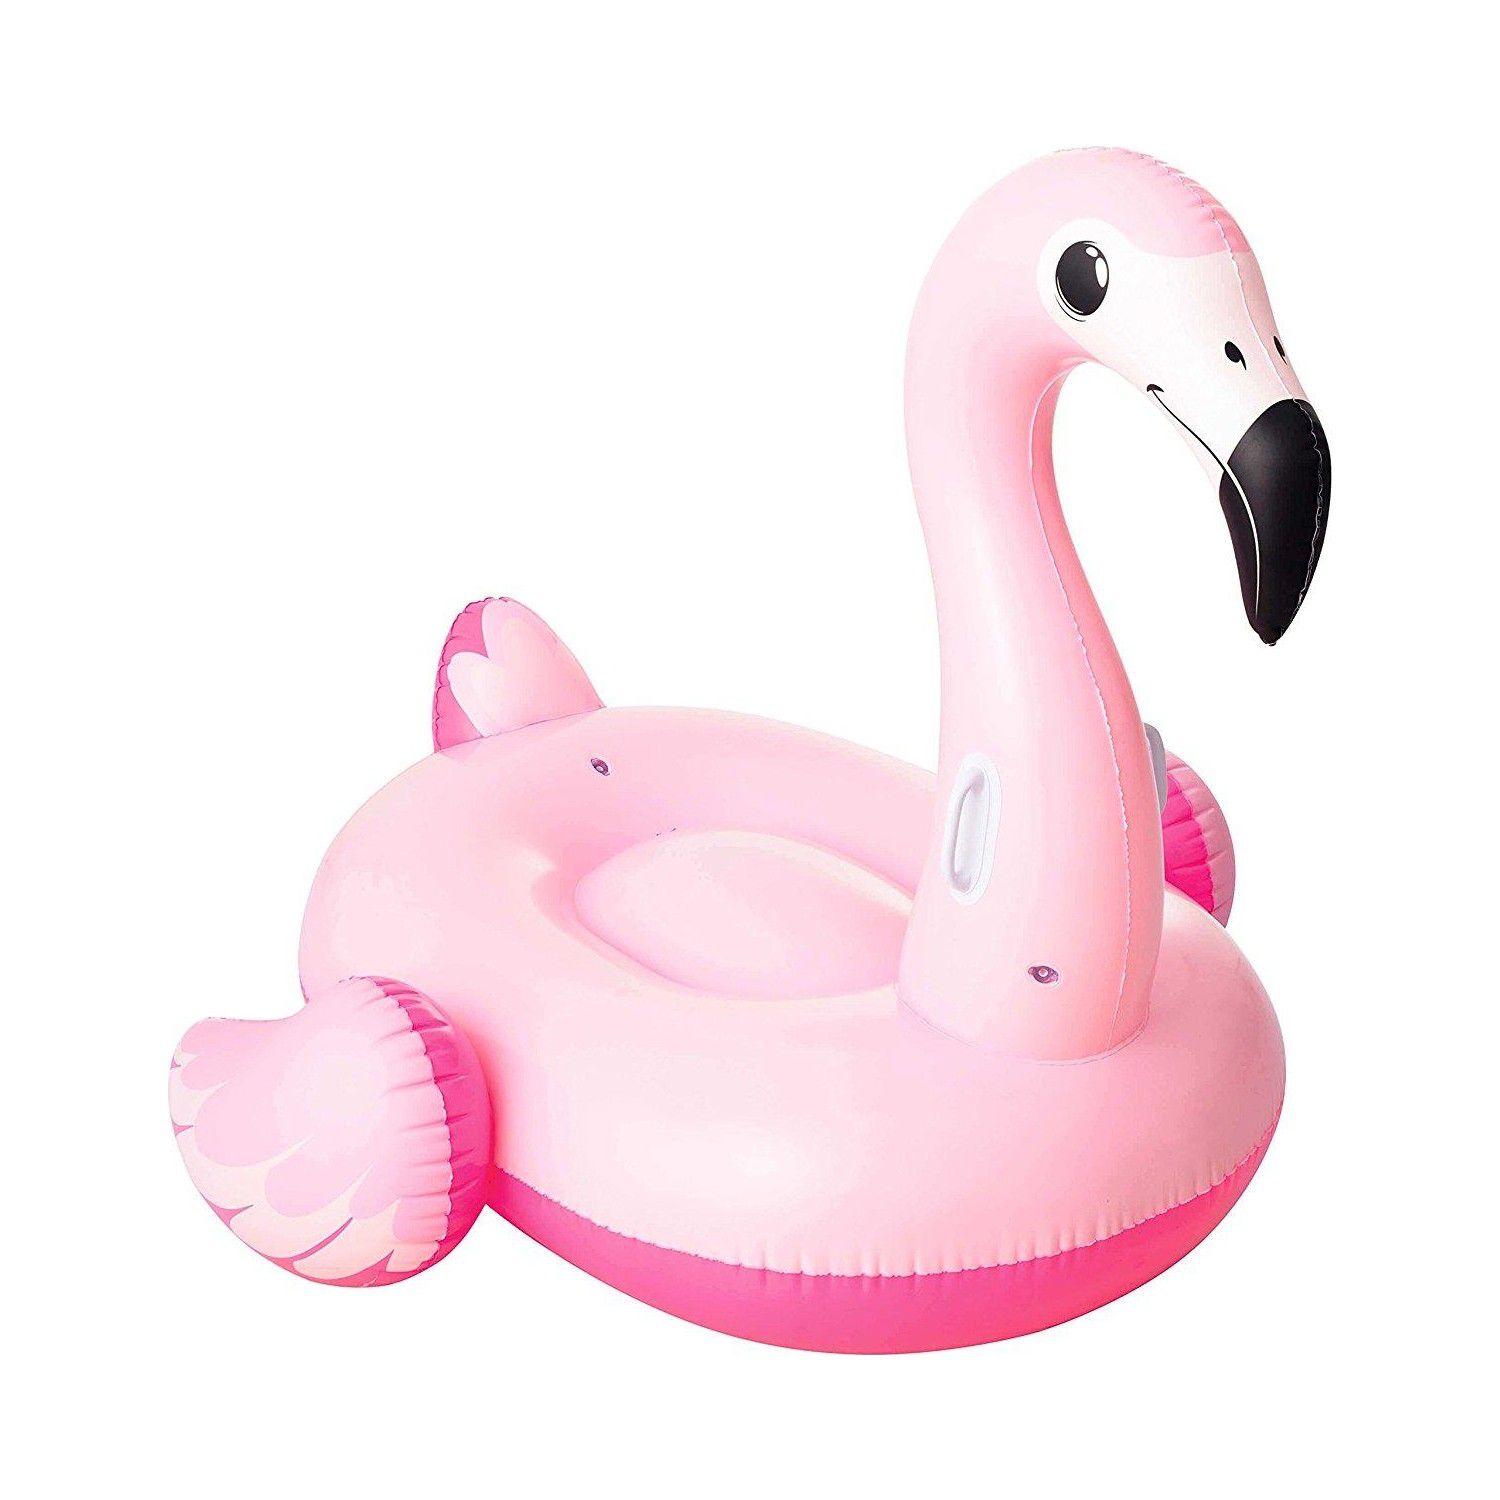 Kit Bóia Inflável Fashion Unicornio + Flamingo Intex